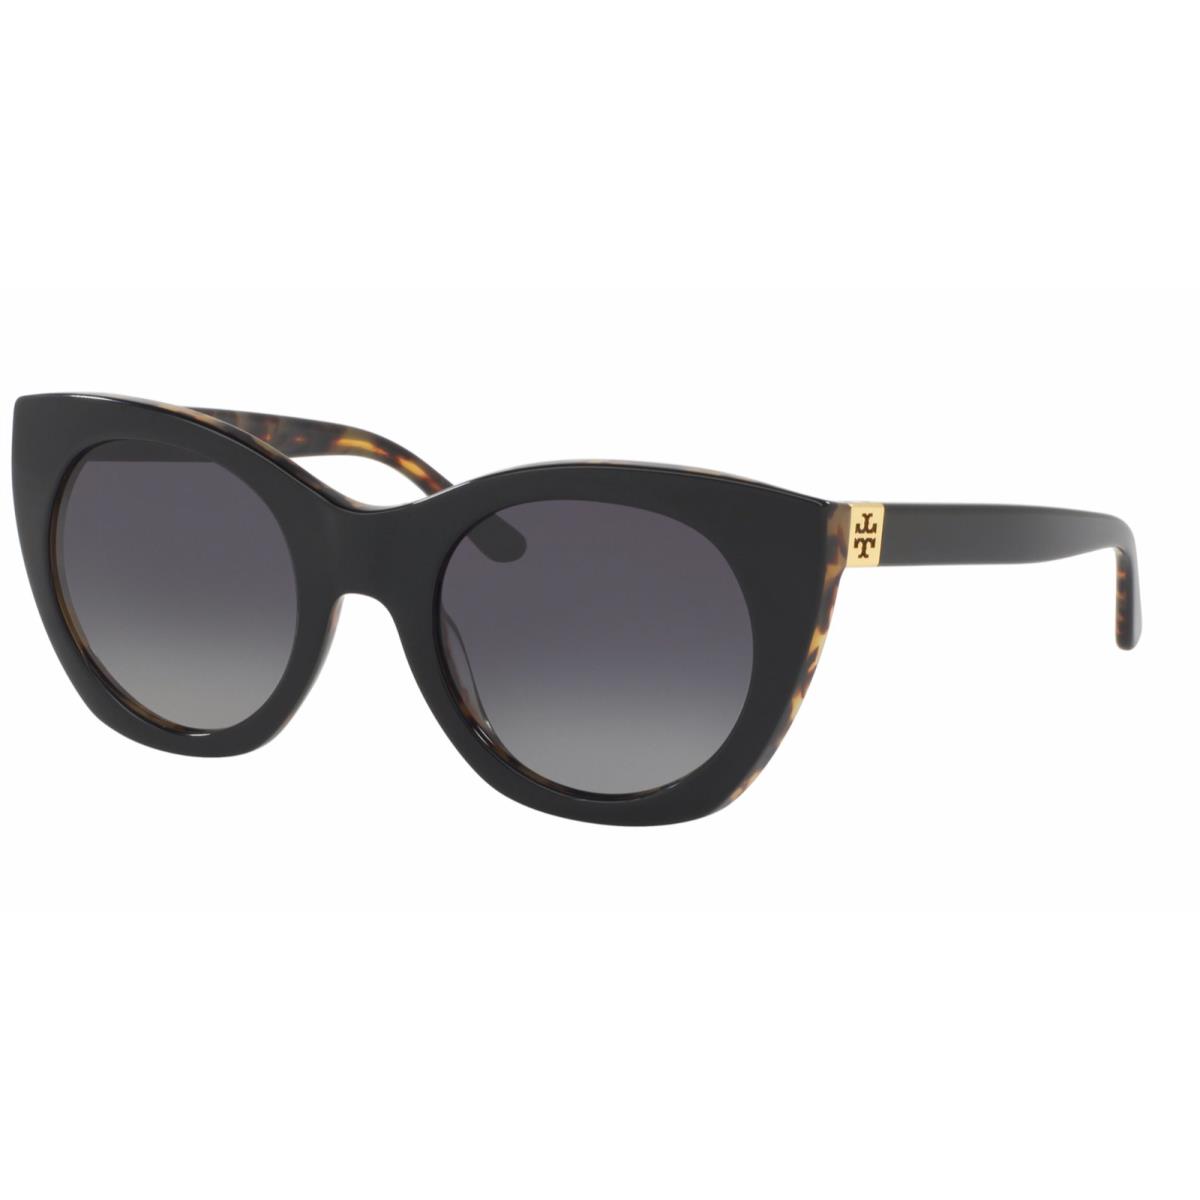 Tory Burch Sunglasses TY 7097 1601/T3 Black Frame Gray Fade Polarized Lenses